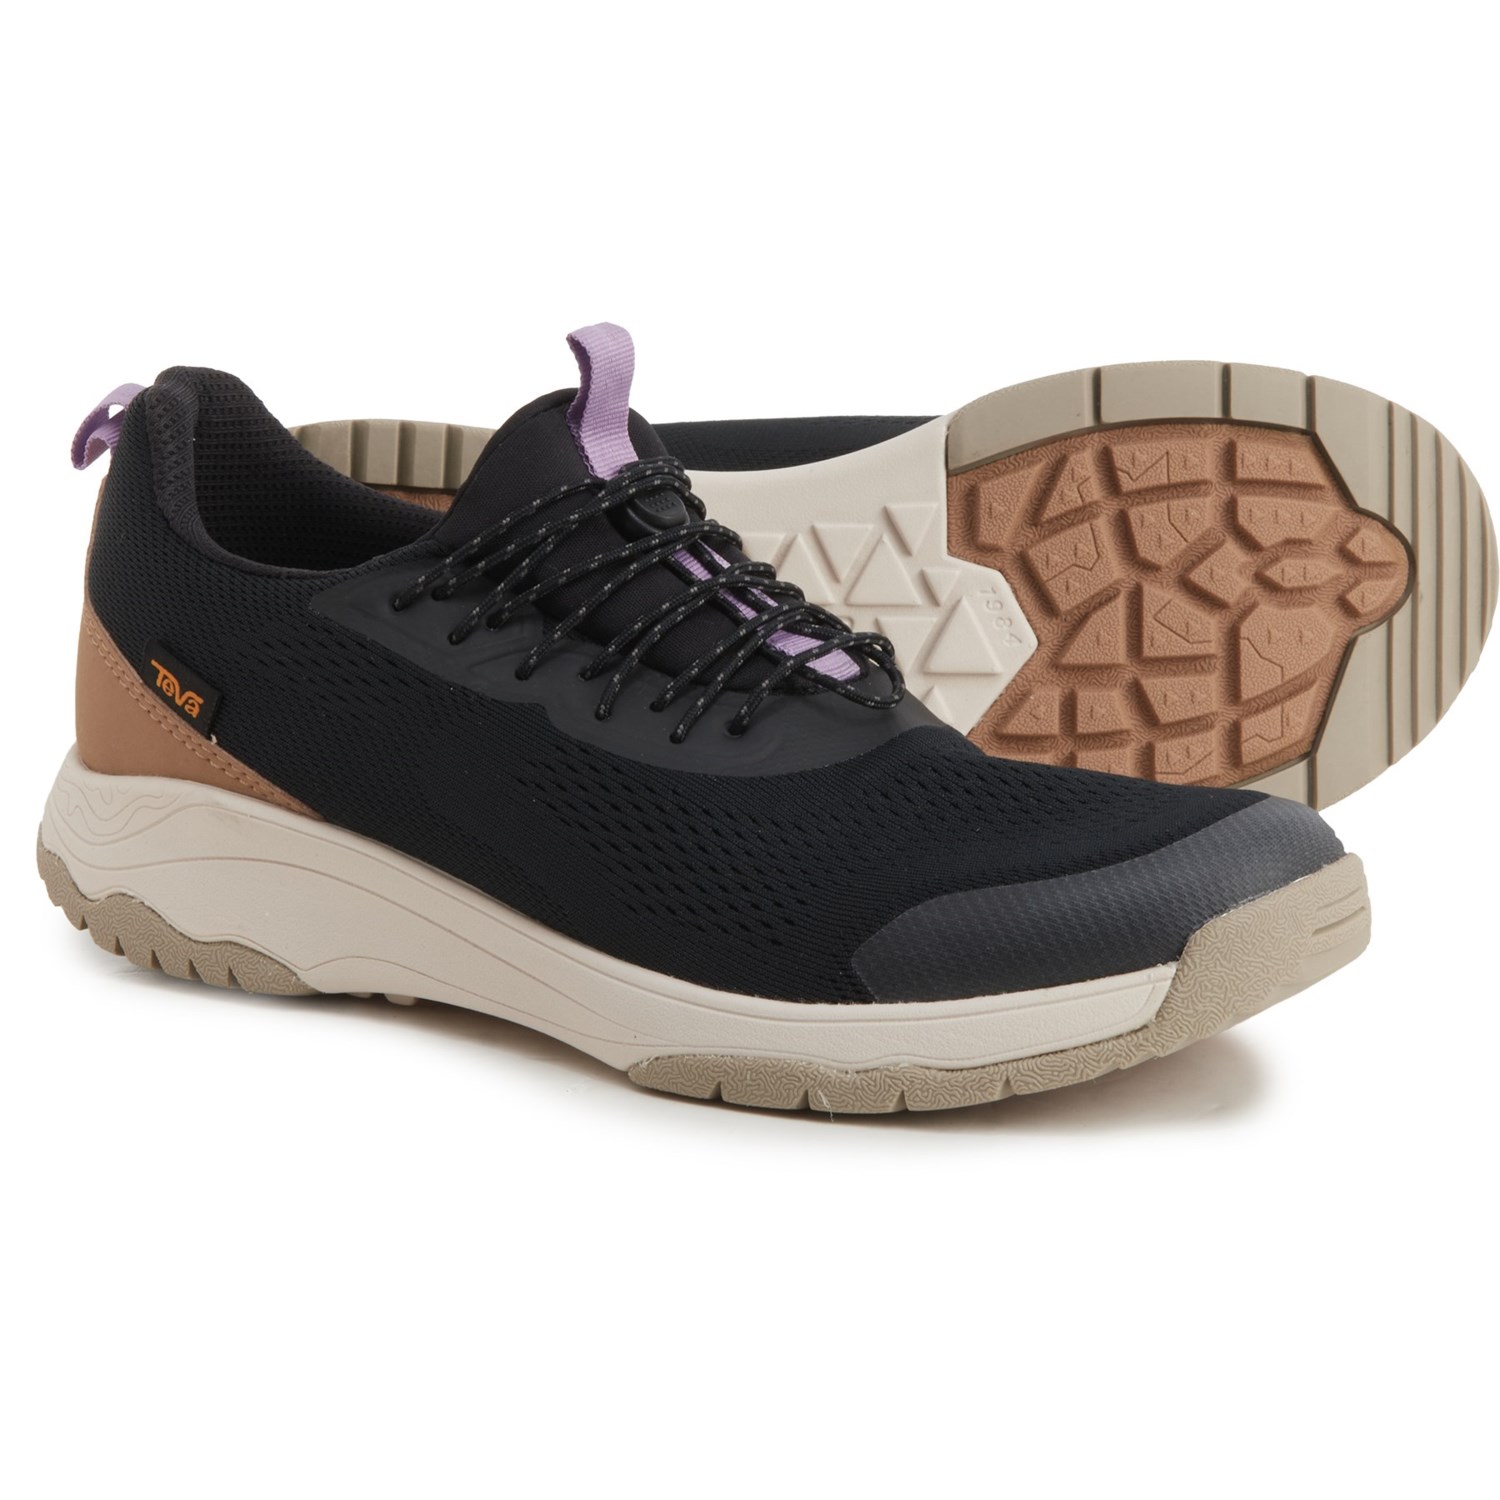 Teva Gateway Swift Hiking Sneakers (For Women) - Save 50%